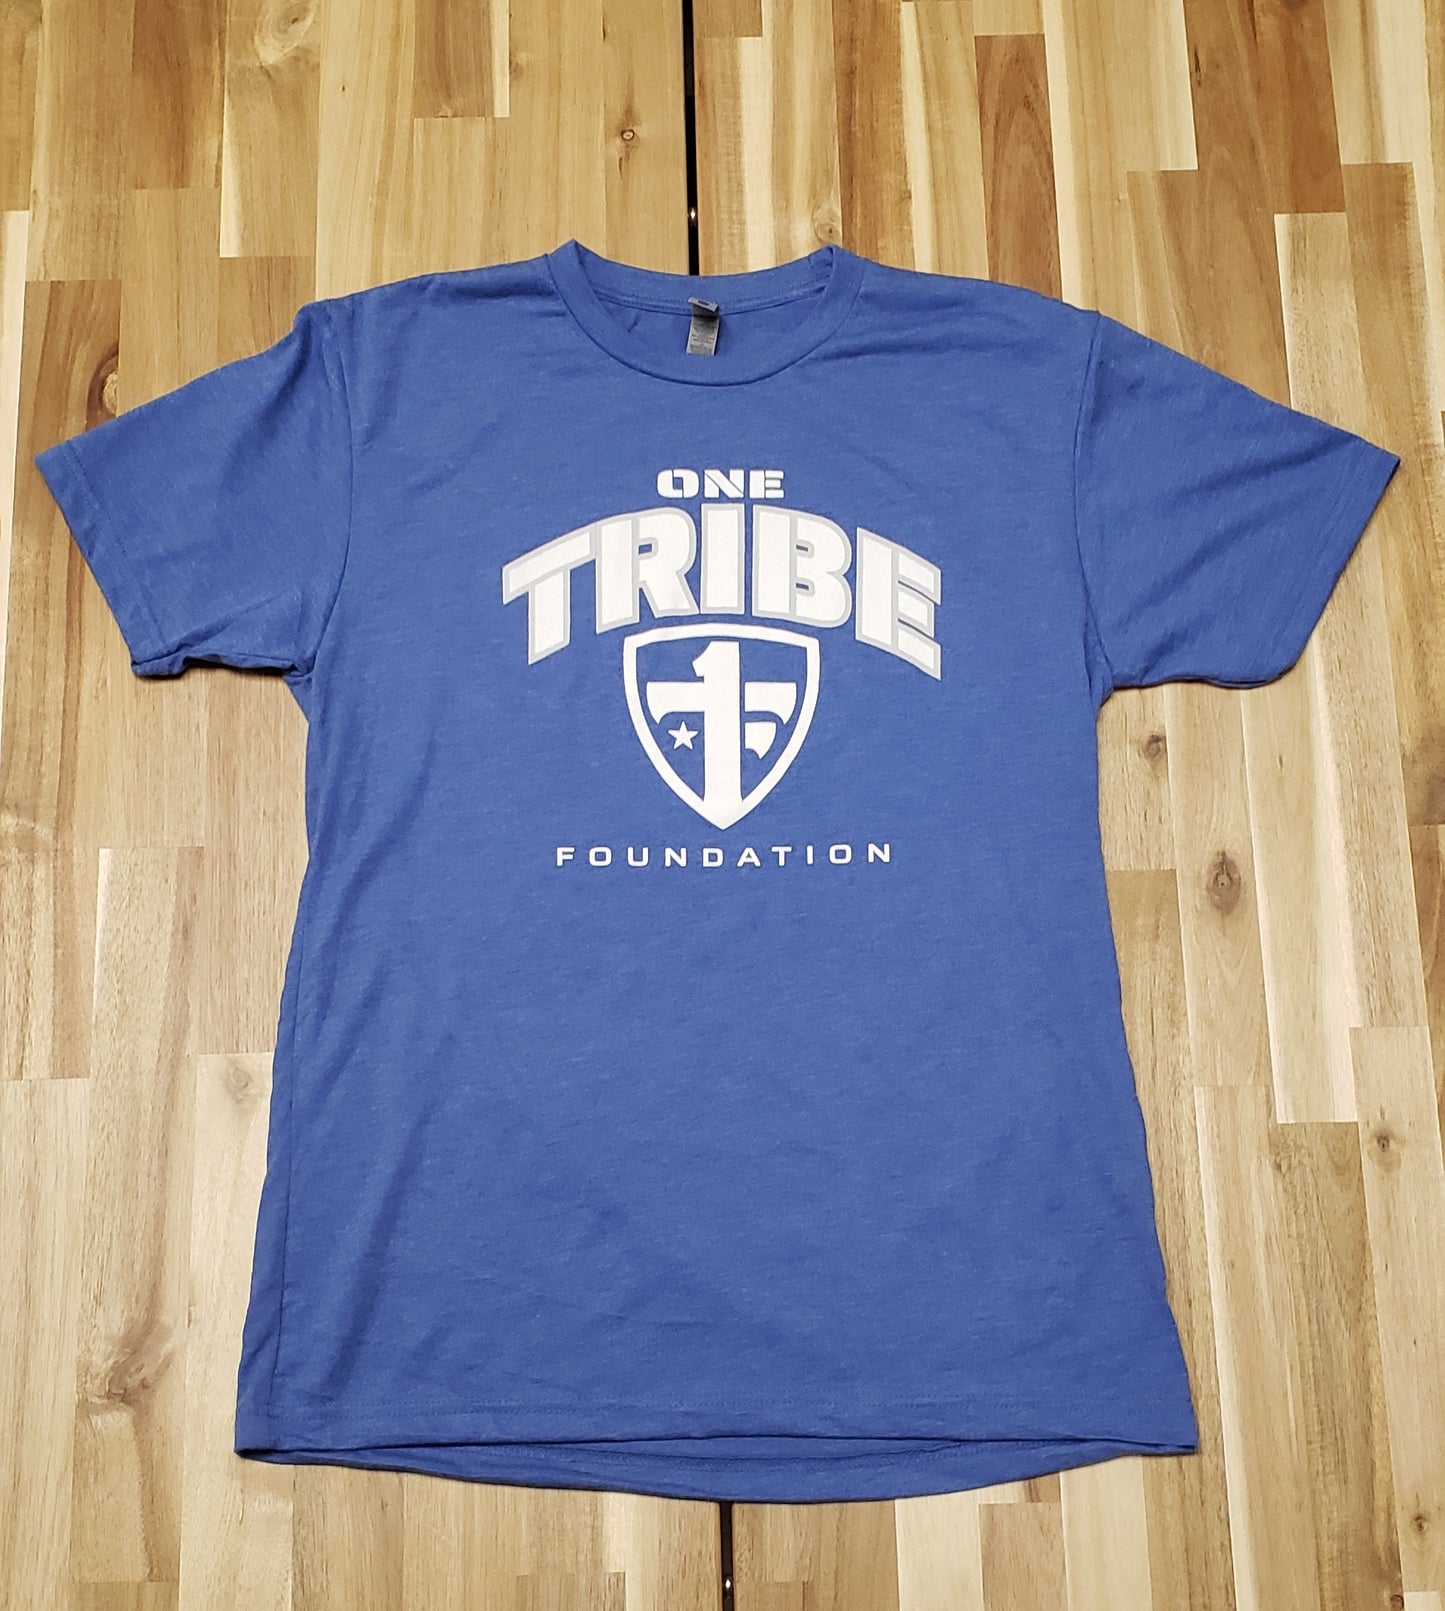 One Tribe Foundation royal blue t-shirt.